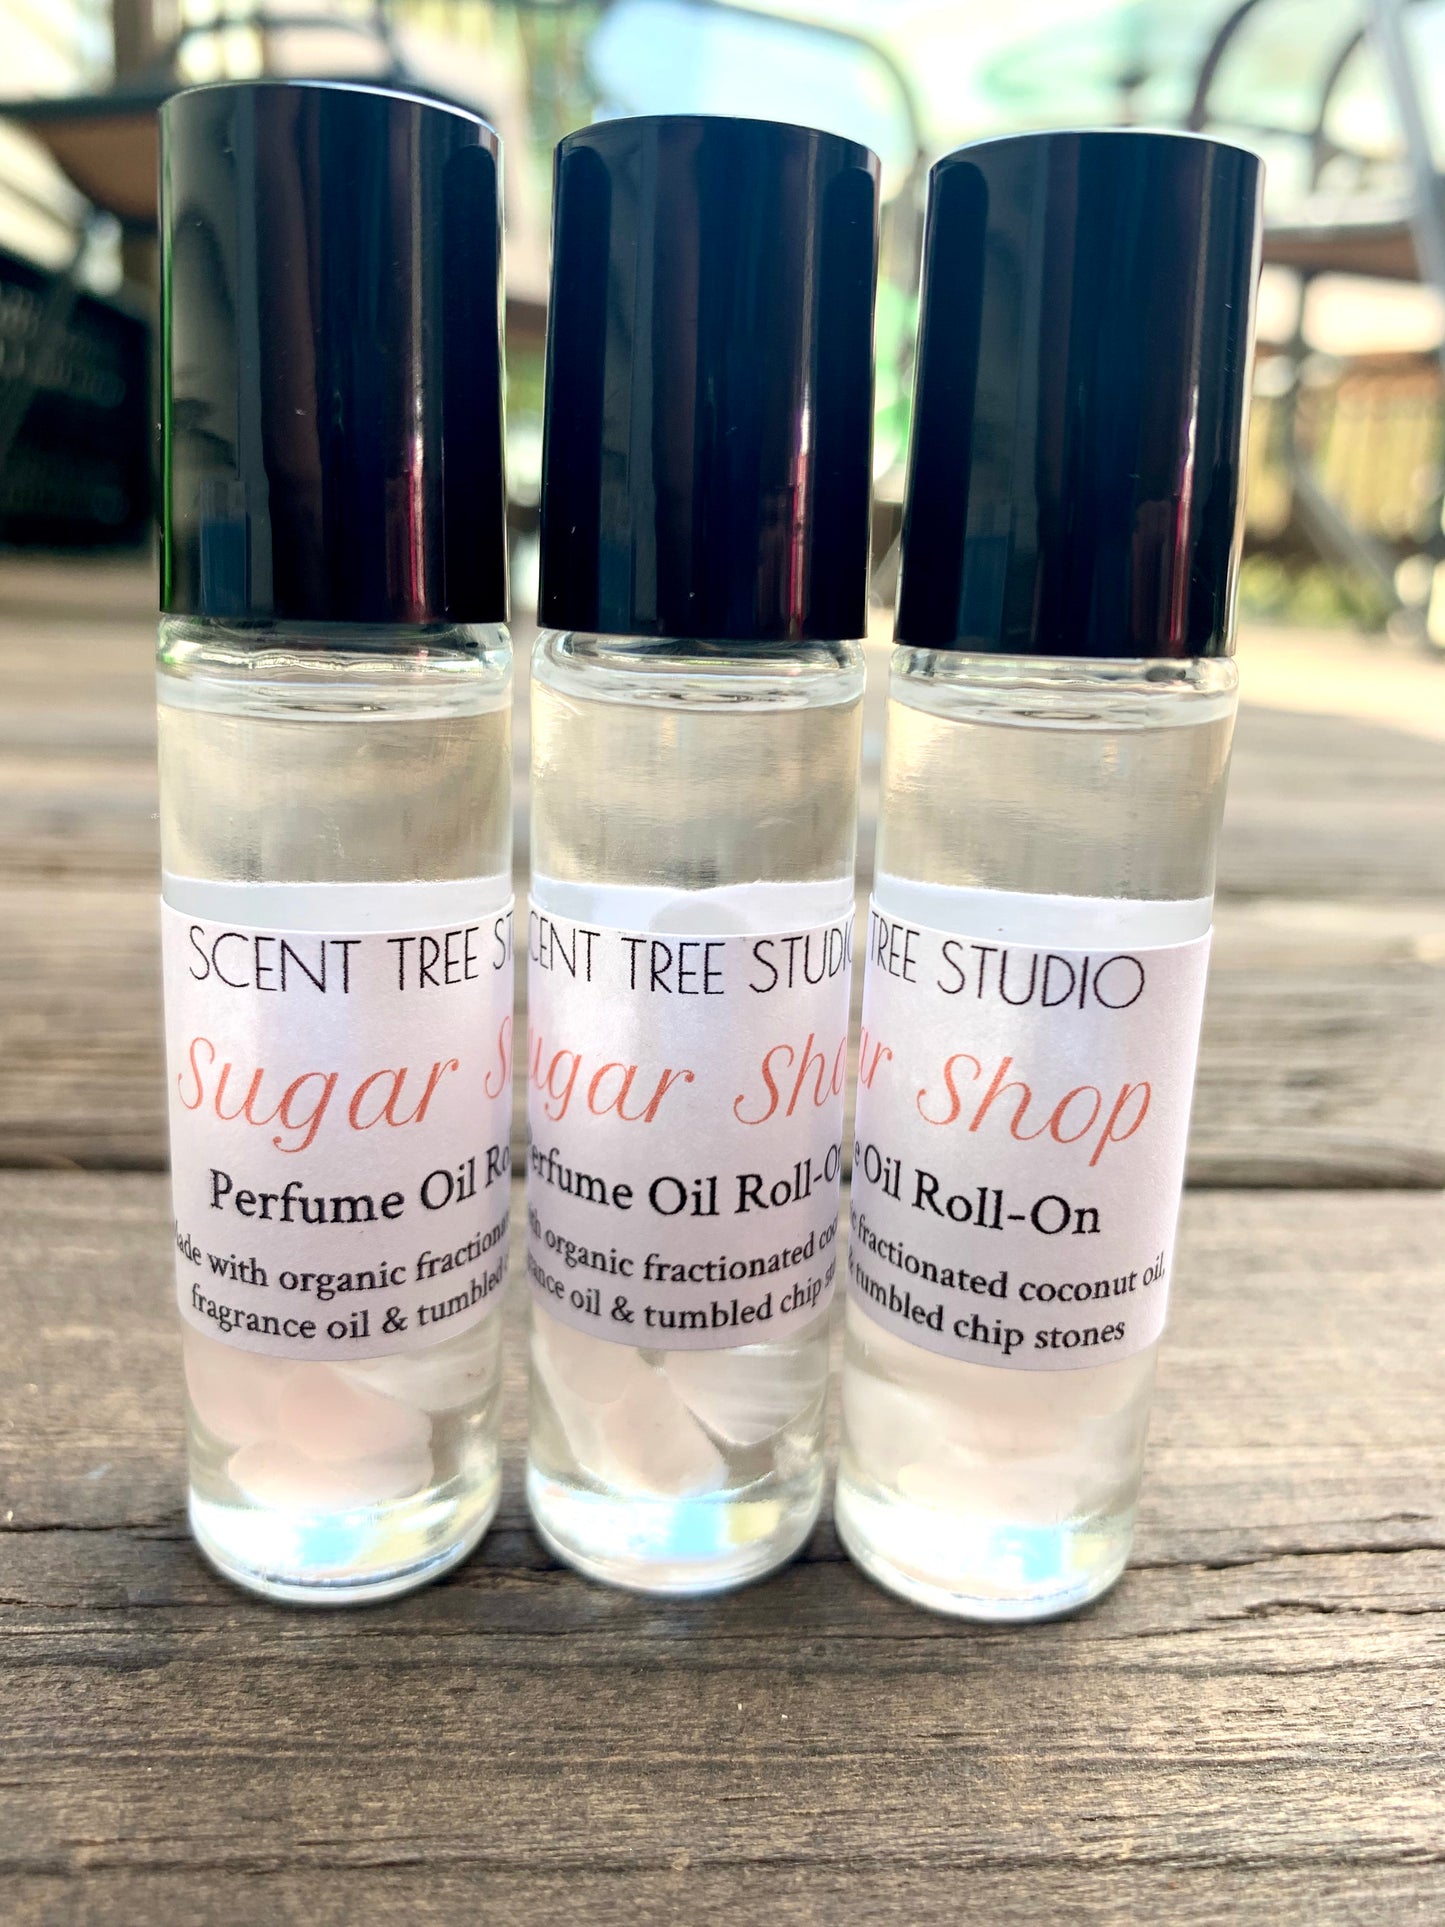 Sugar Shop Perfume Oil Roll-On - Scent Tree Studio